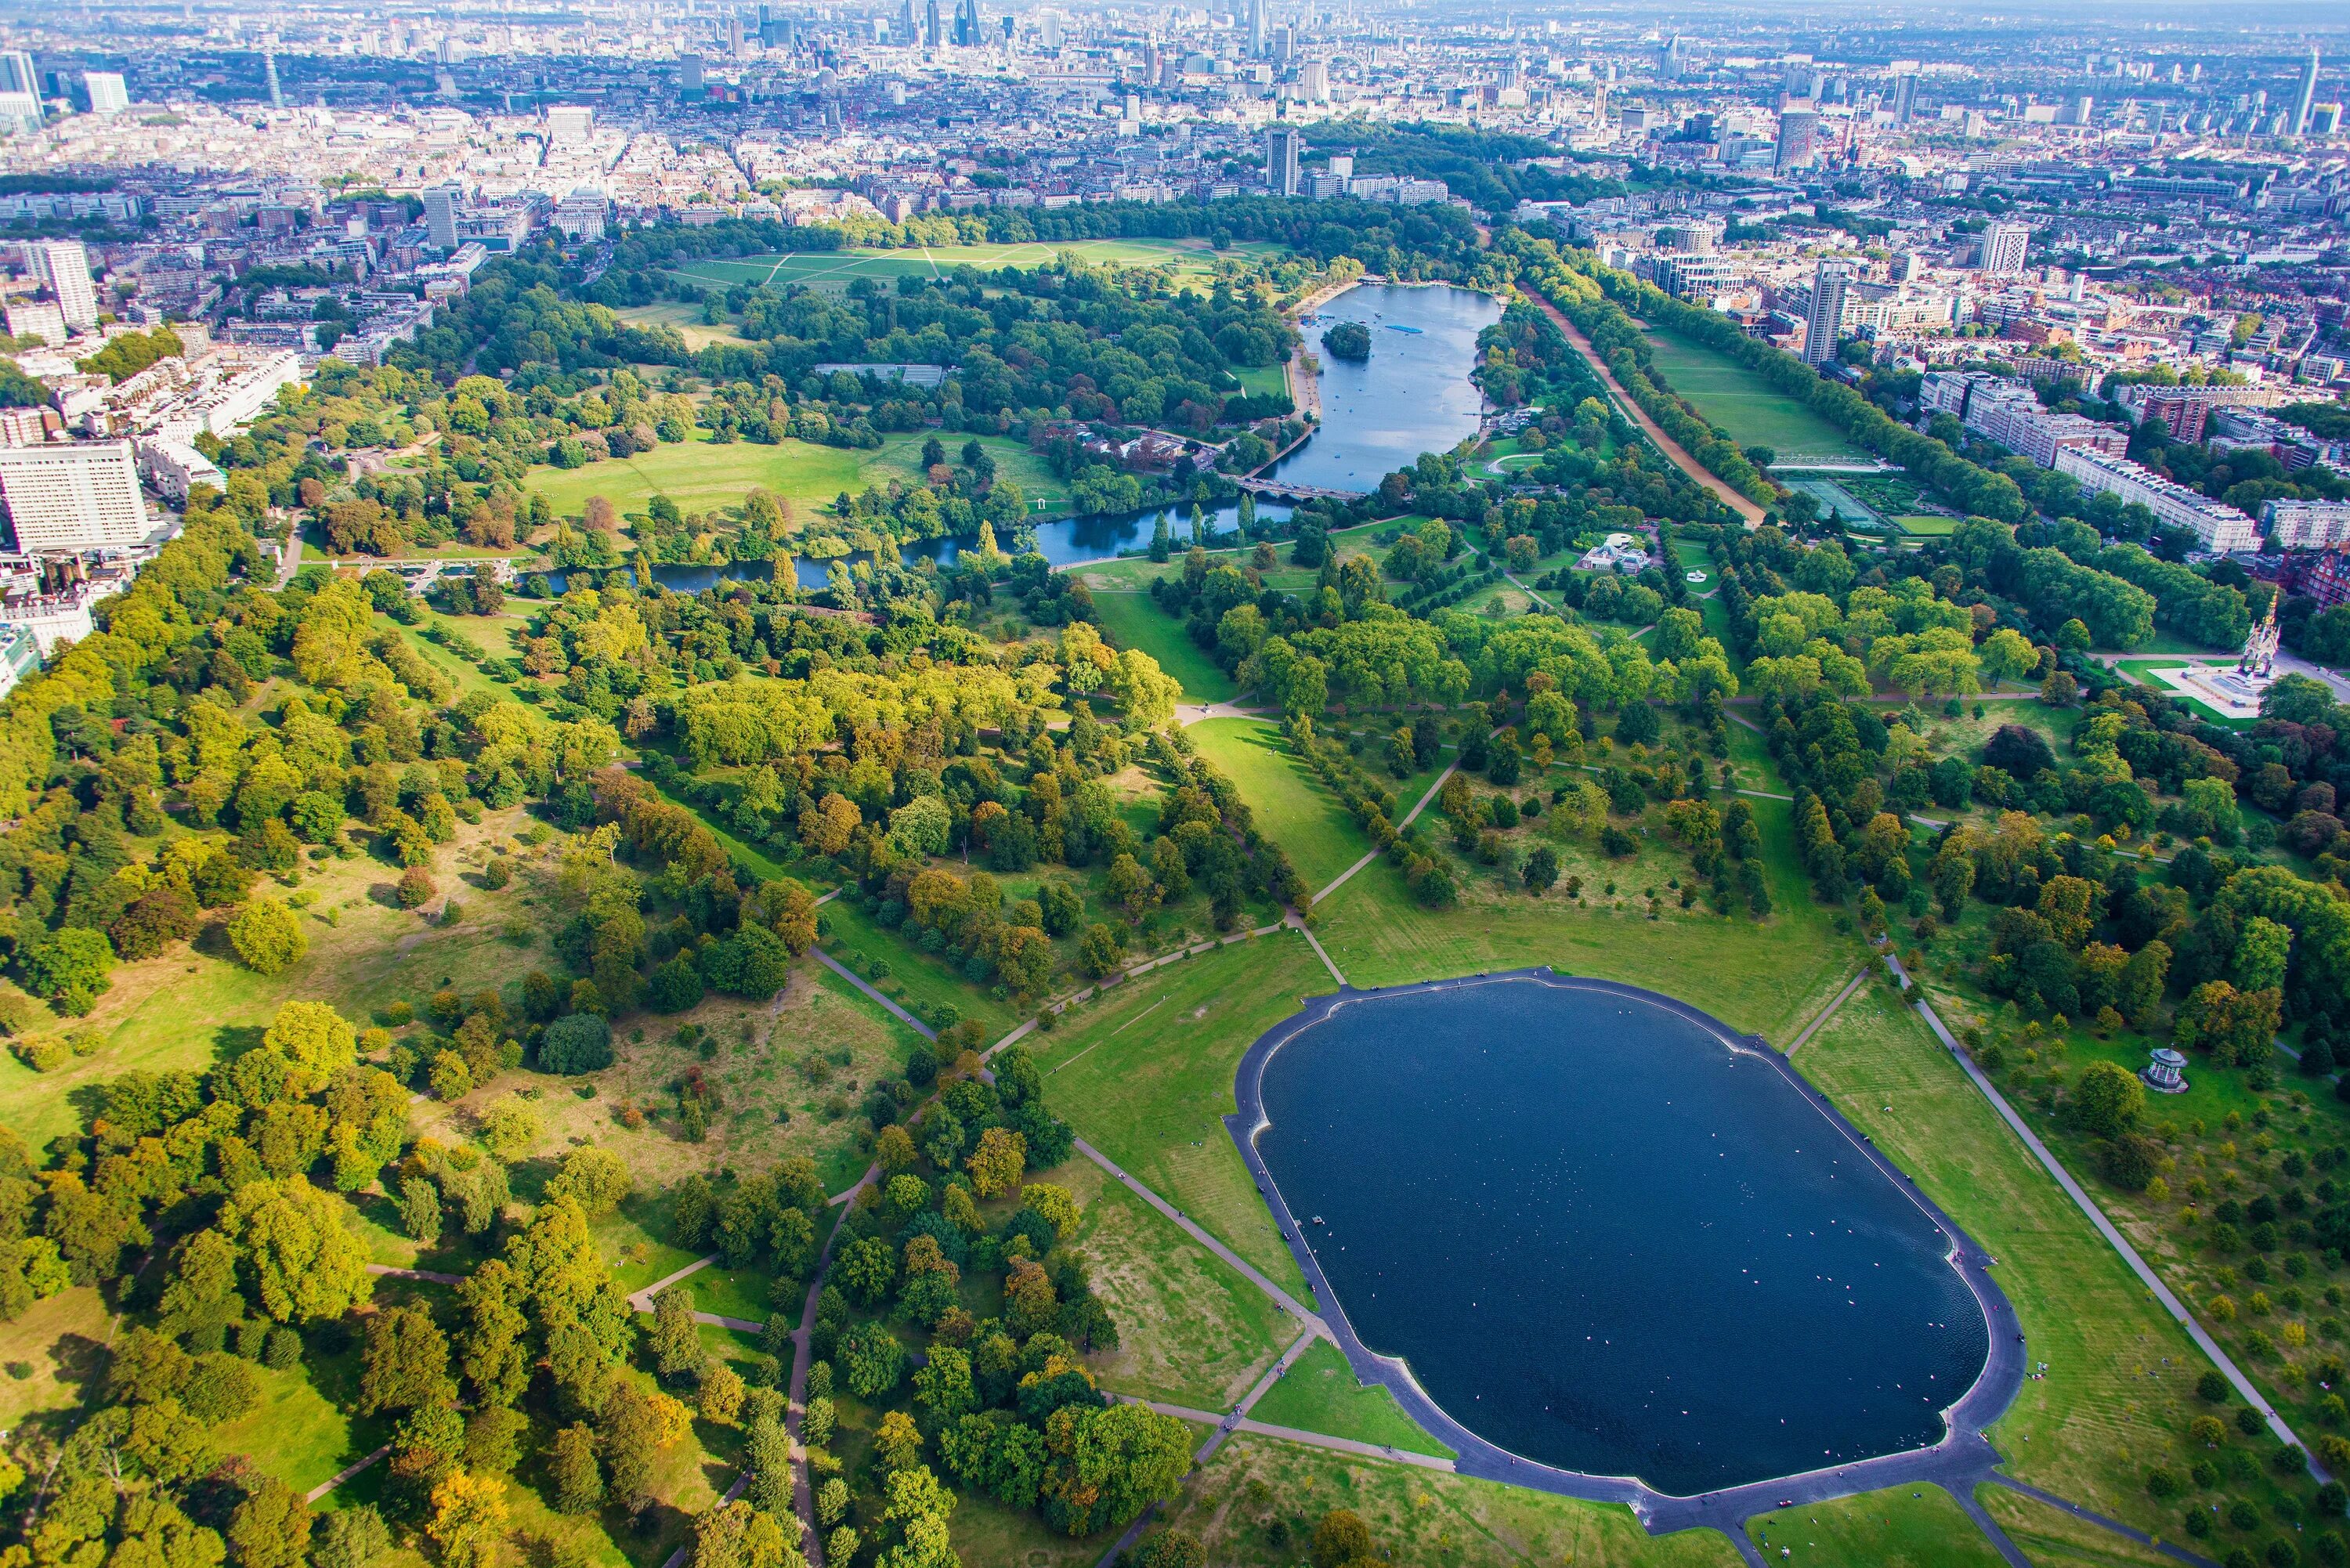 Park in. Гайд-парк (Hyde Park), Лондон. Парки Лондона гайд парк. Гайд парк в Лондоне. Парк в Лондоне гайд парк.